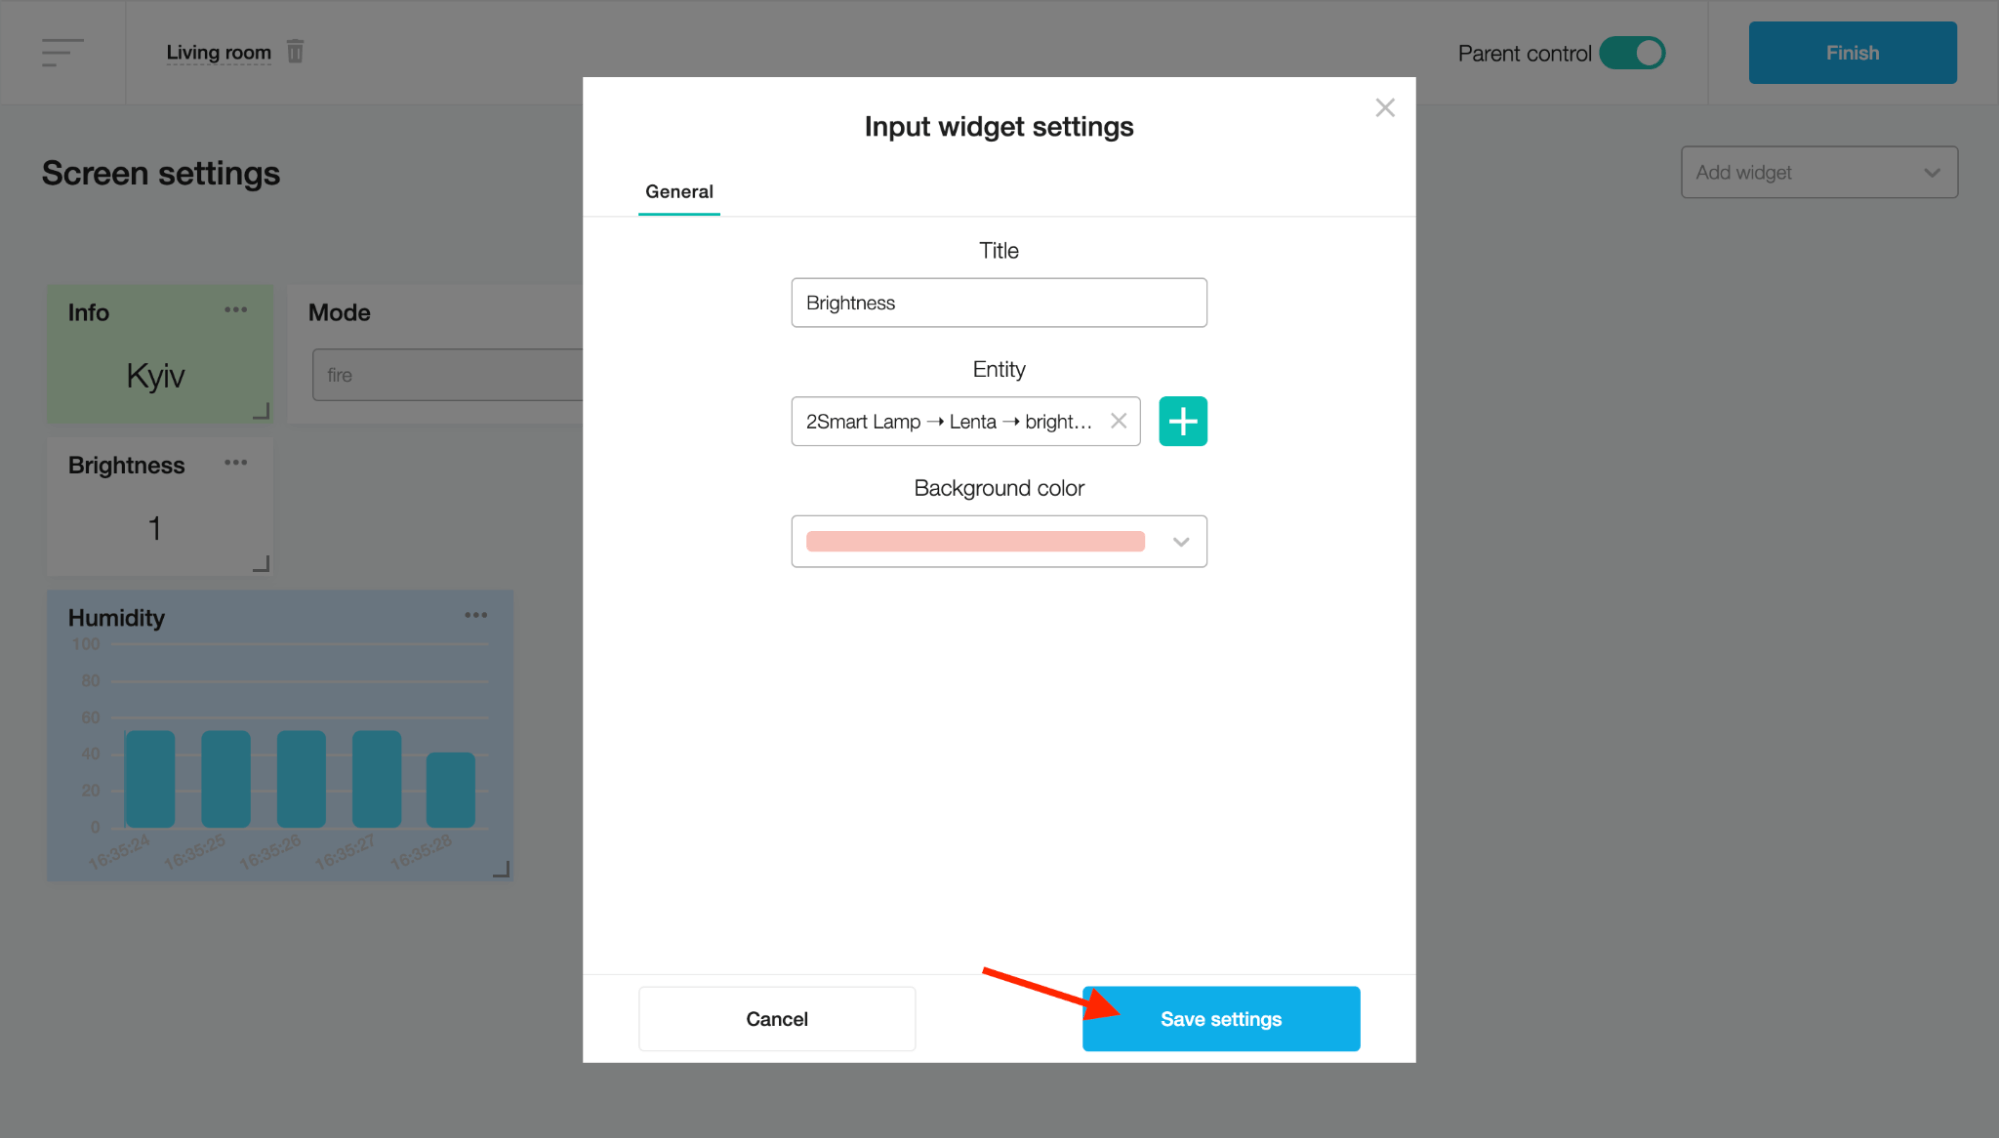 Input widget settings